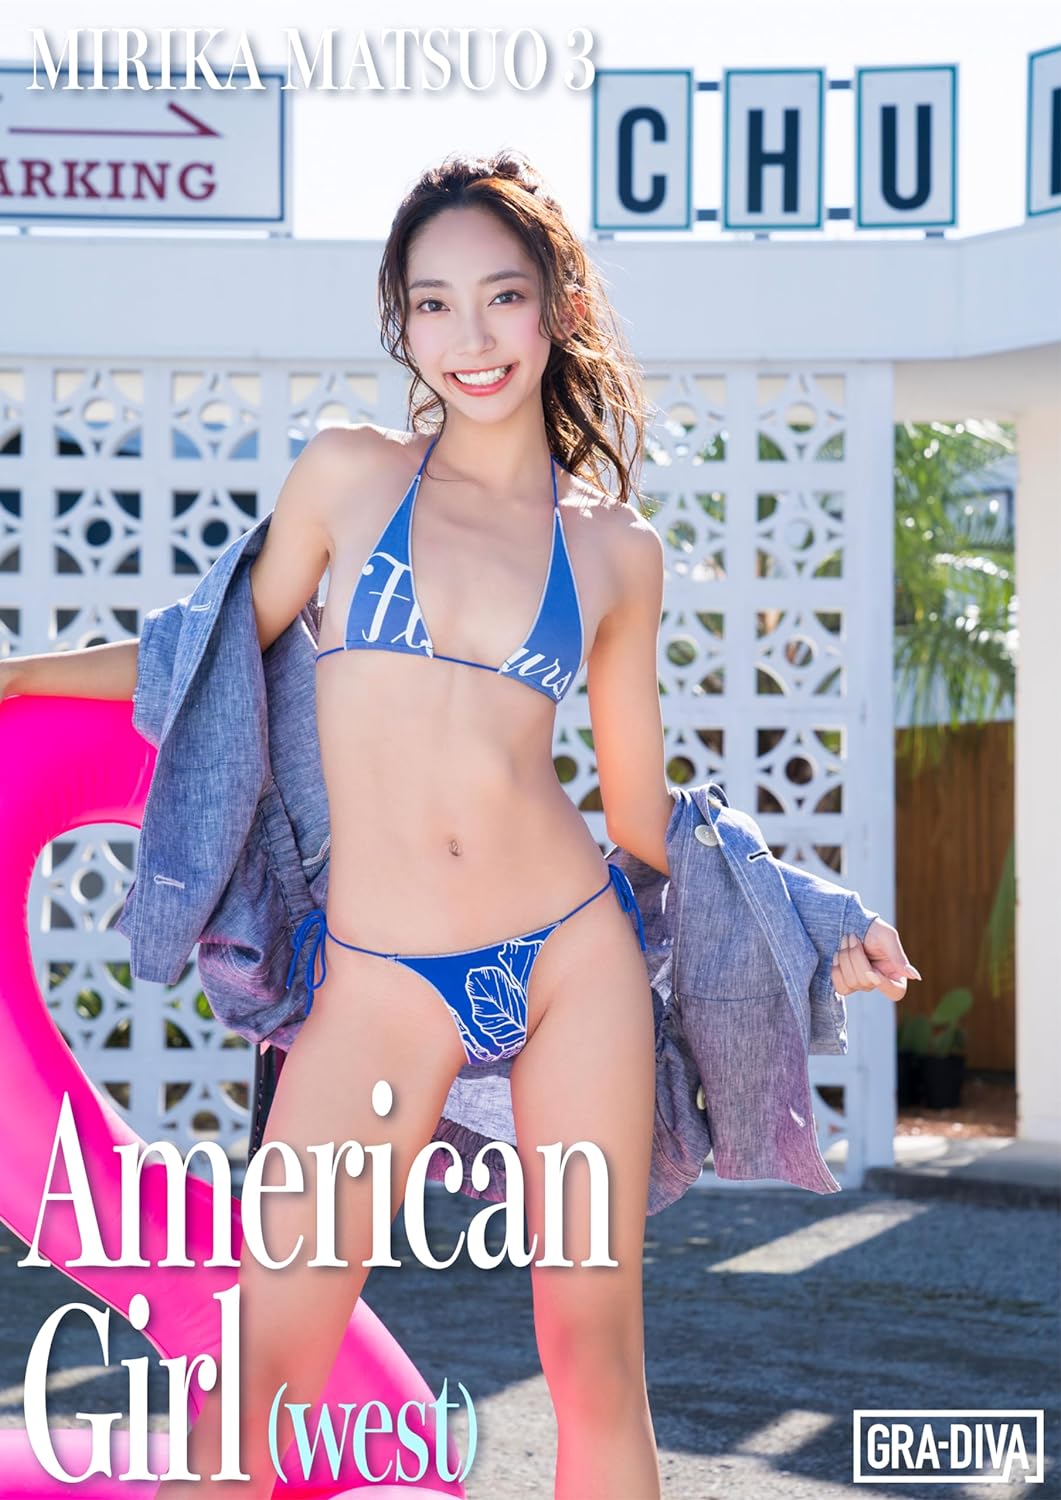 American Girl (west) MIRIKA MATSUO 3 松尾実李果 (GRA-DIVA) Kindle版のサンプル画像